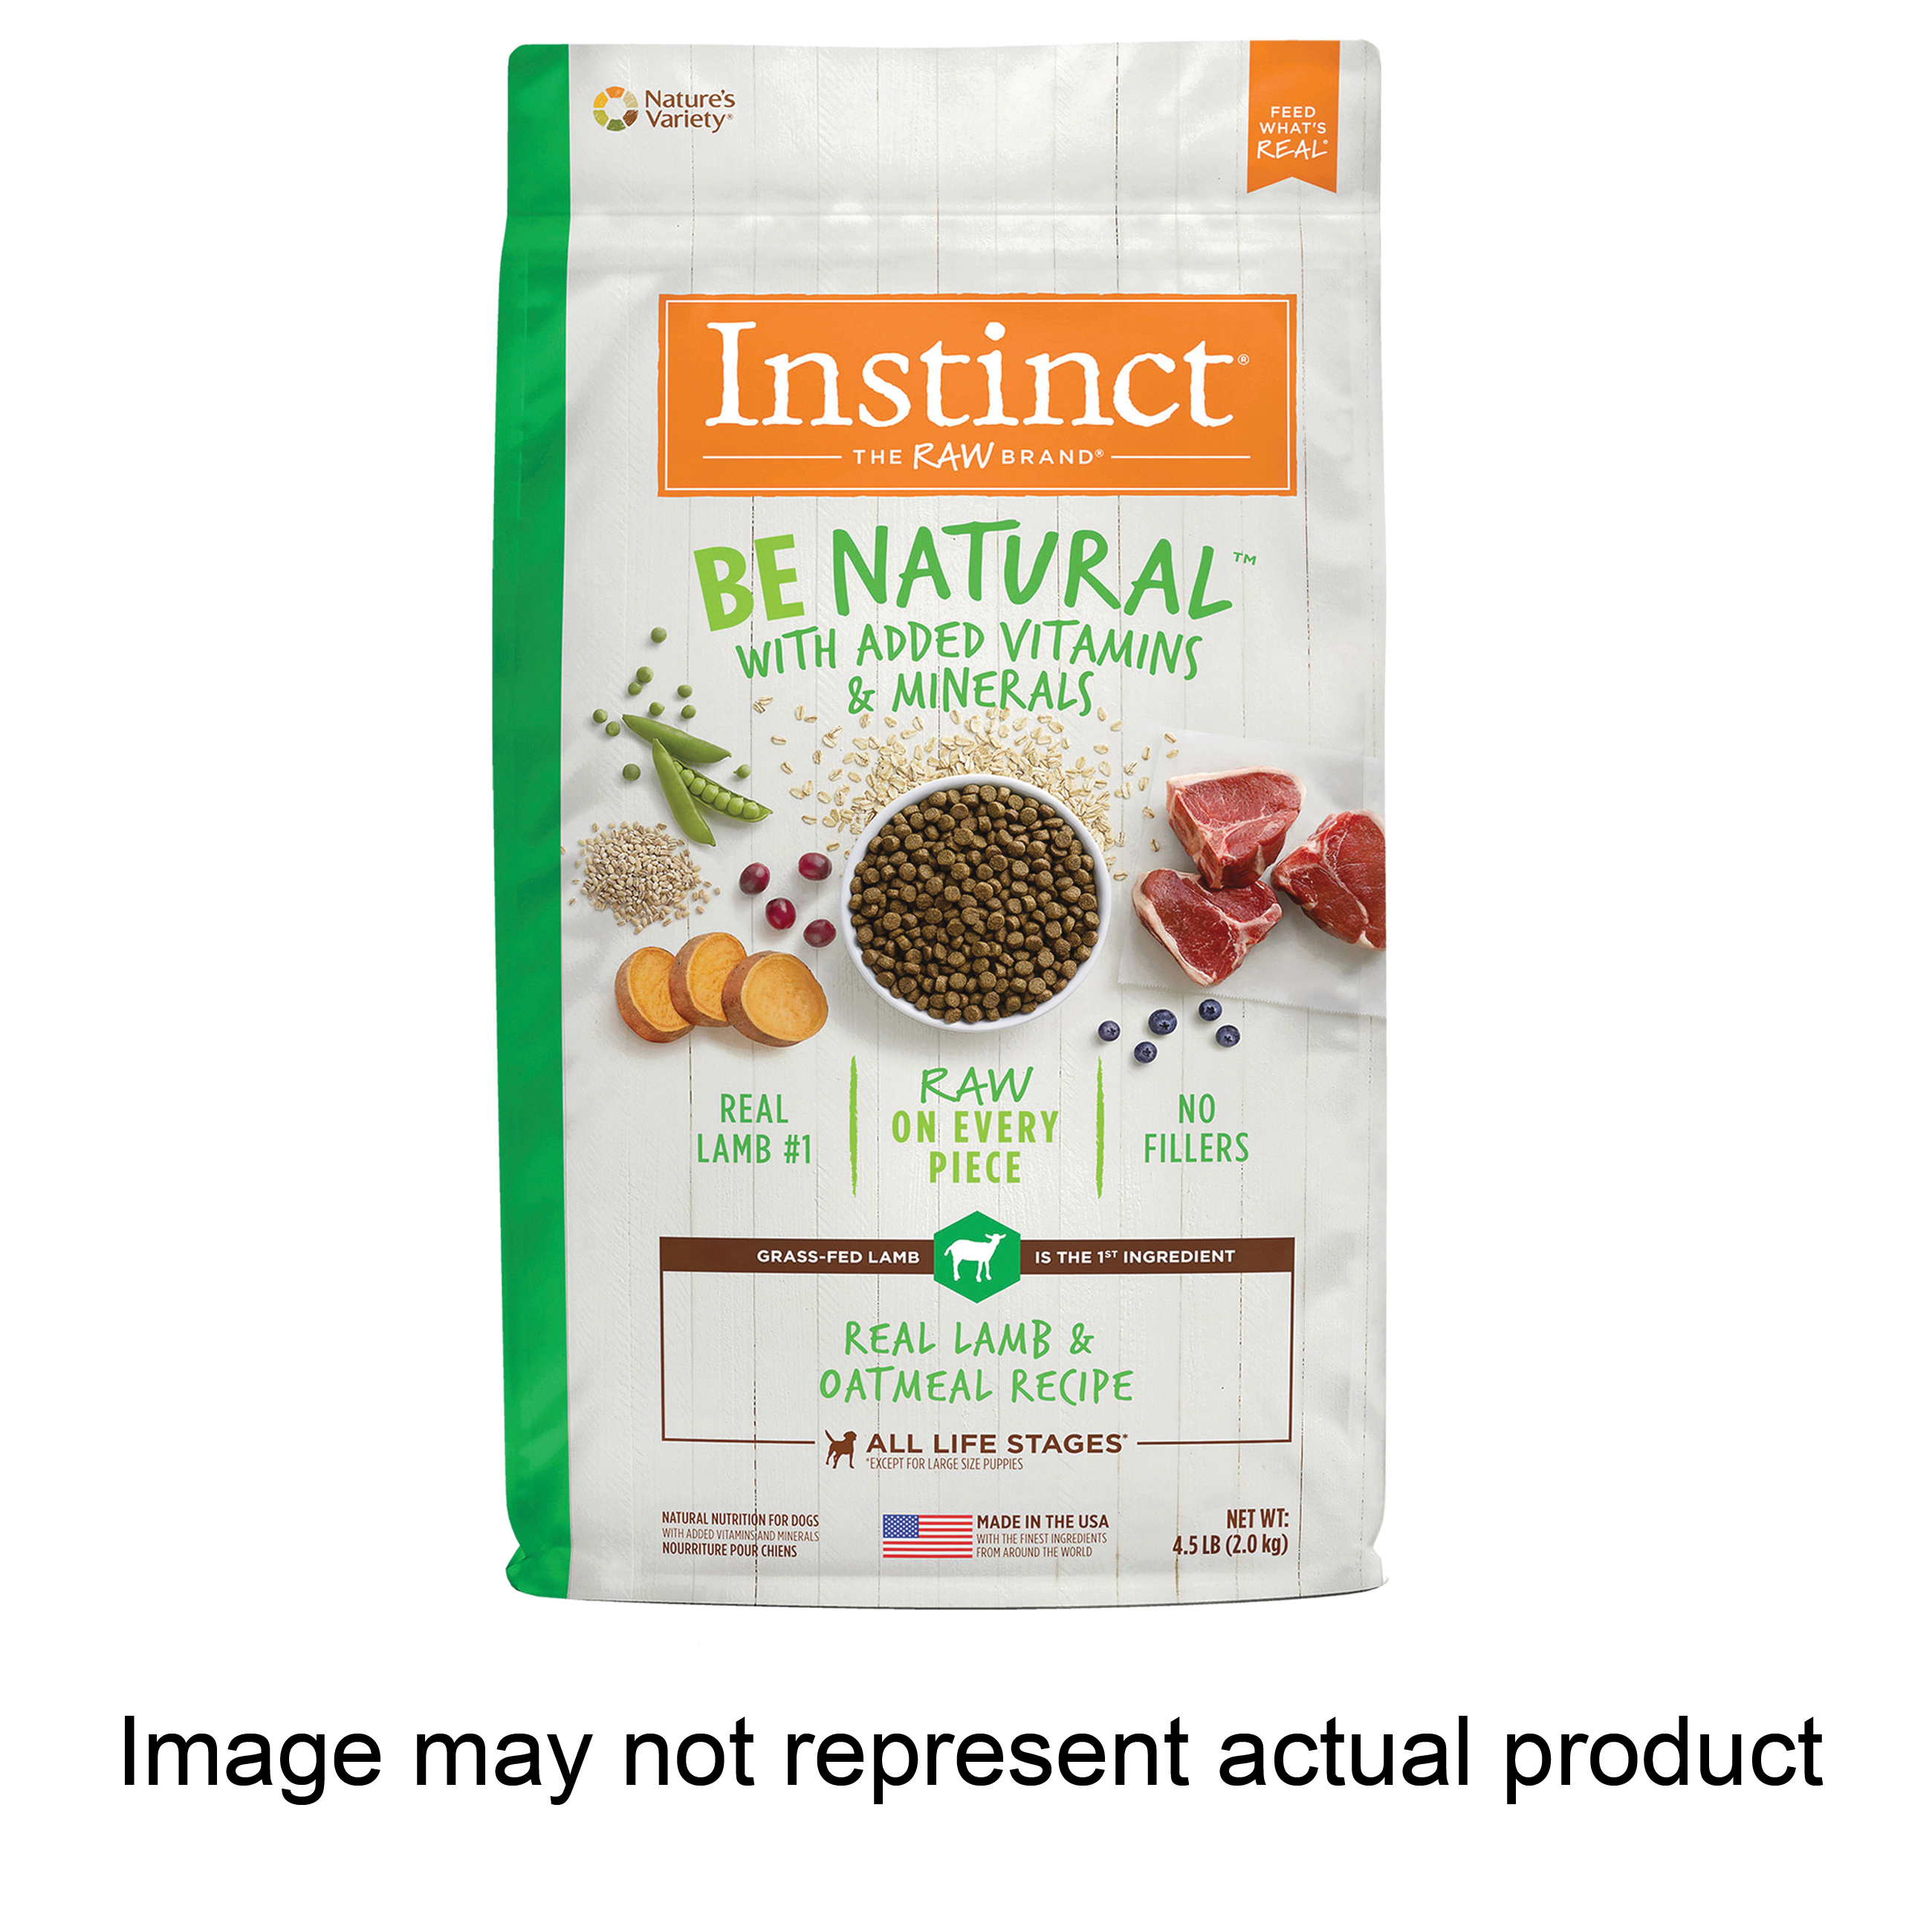 Instinct Be Natural 6165288 Dog Food, Lamb, Oatmeal Flavor, 25 lb Bag - 1